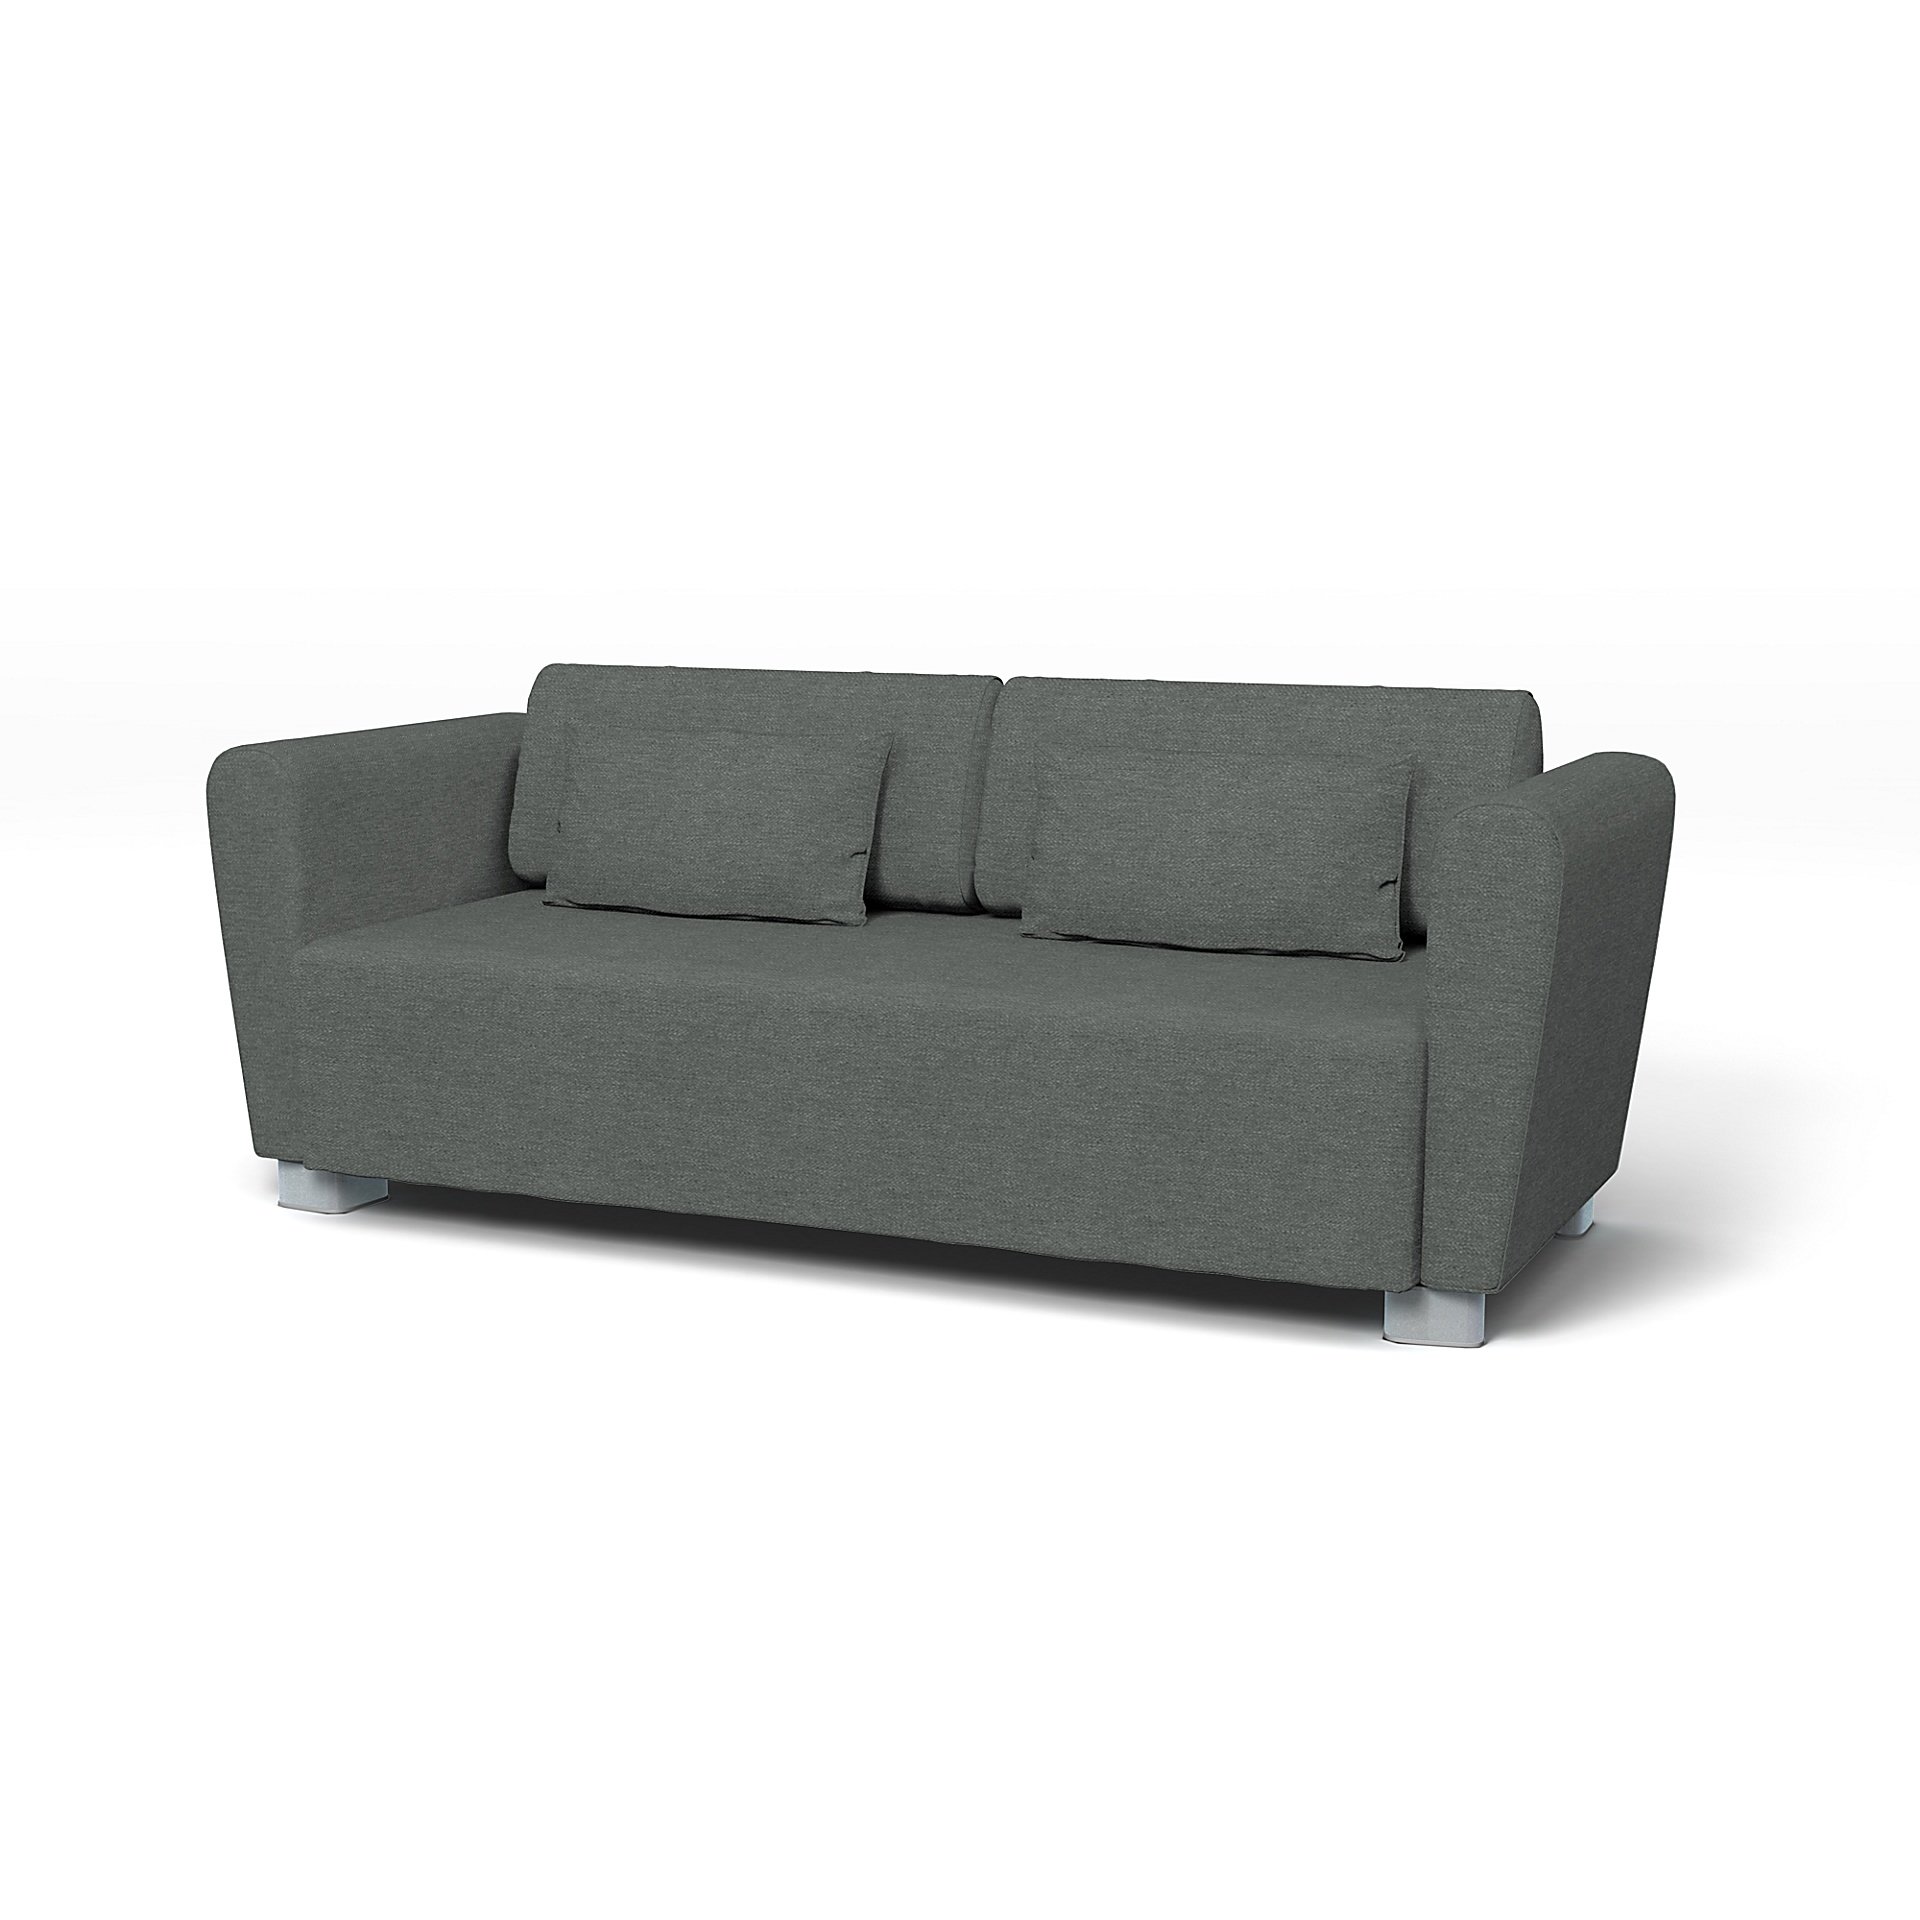 IKEA - Mysinge 2 Seater Sofa Cover, Laurel, Boucle & Texture - Bemz